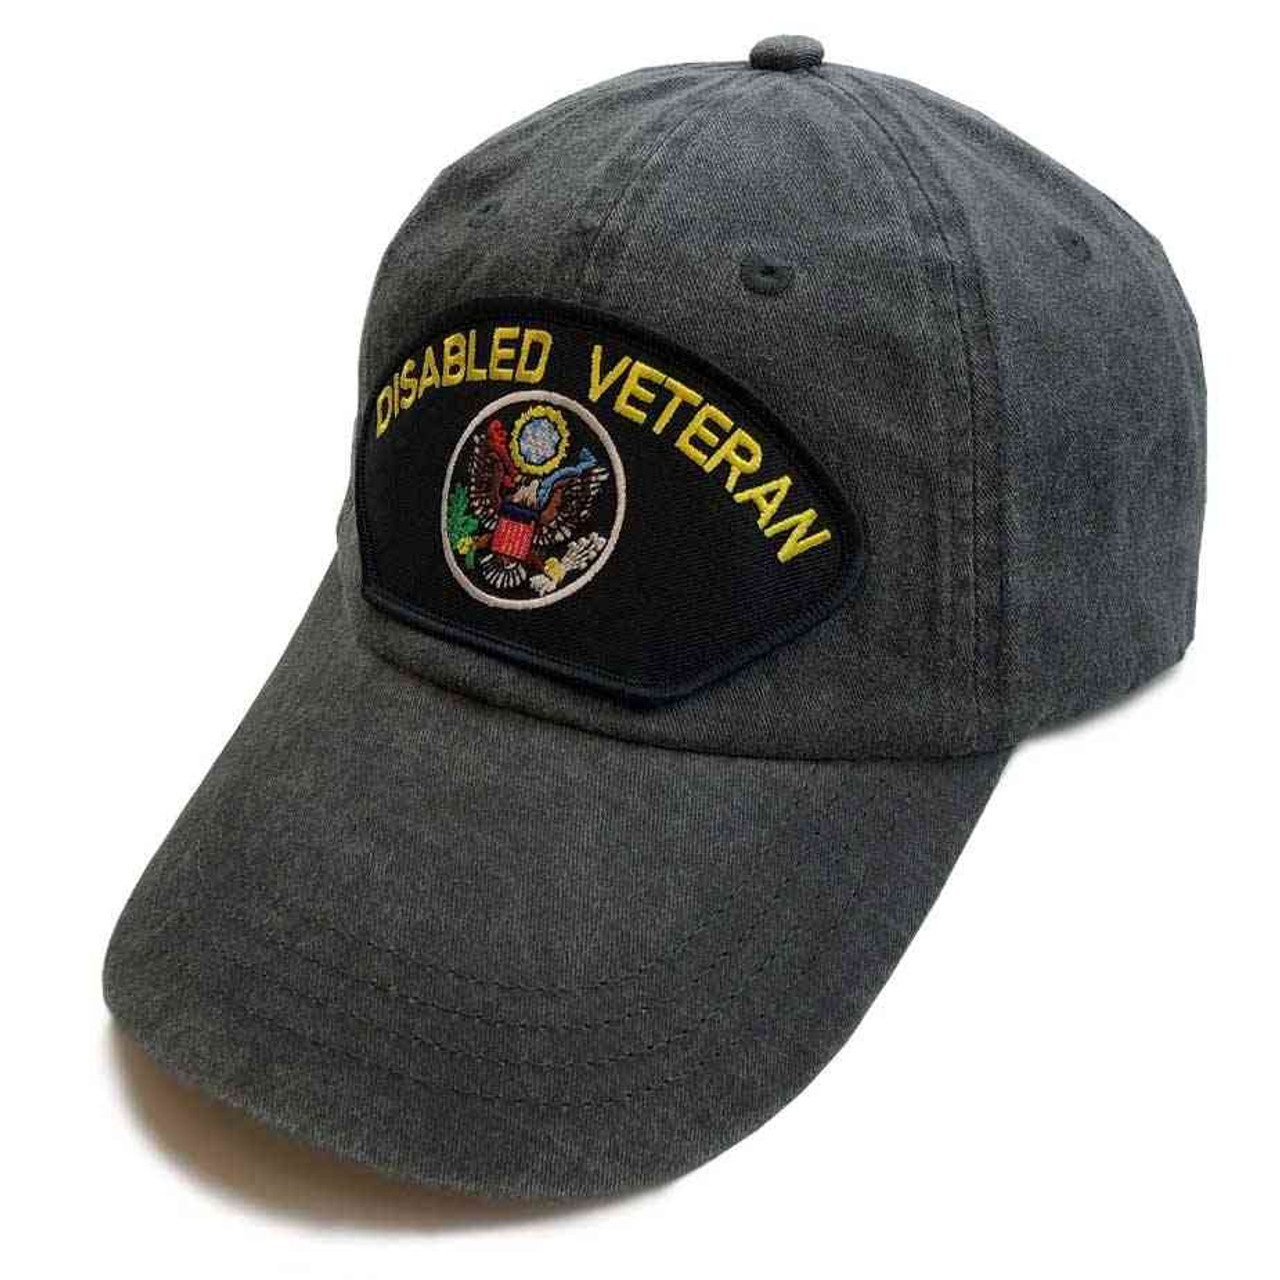 disabled veteran special edition vintage hat